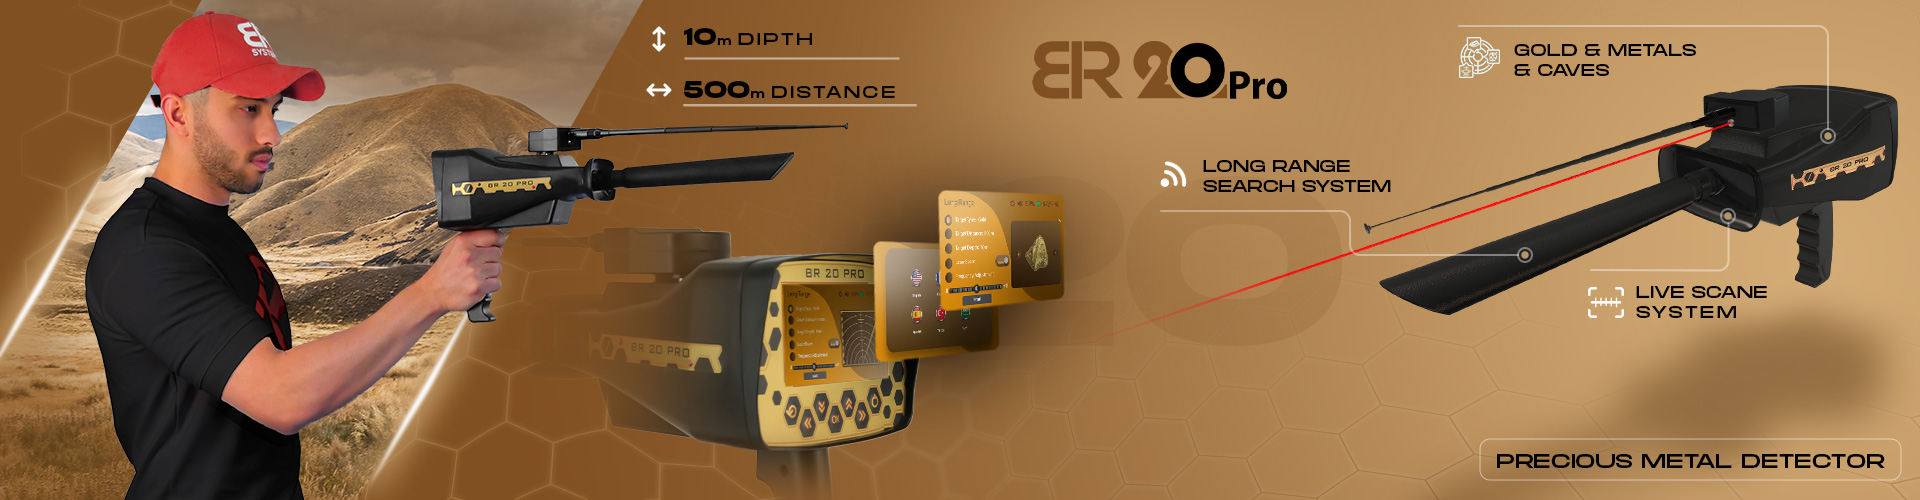 BR 20 Pro - Golddetektor